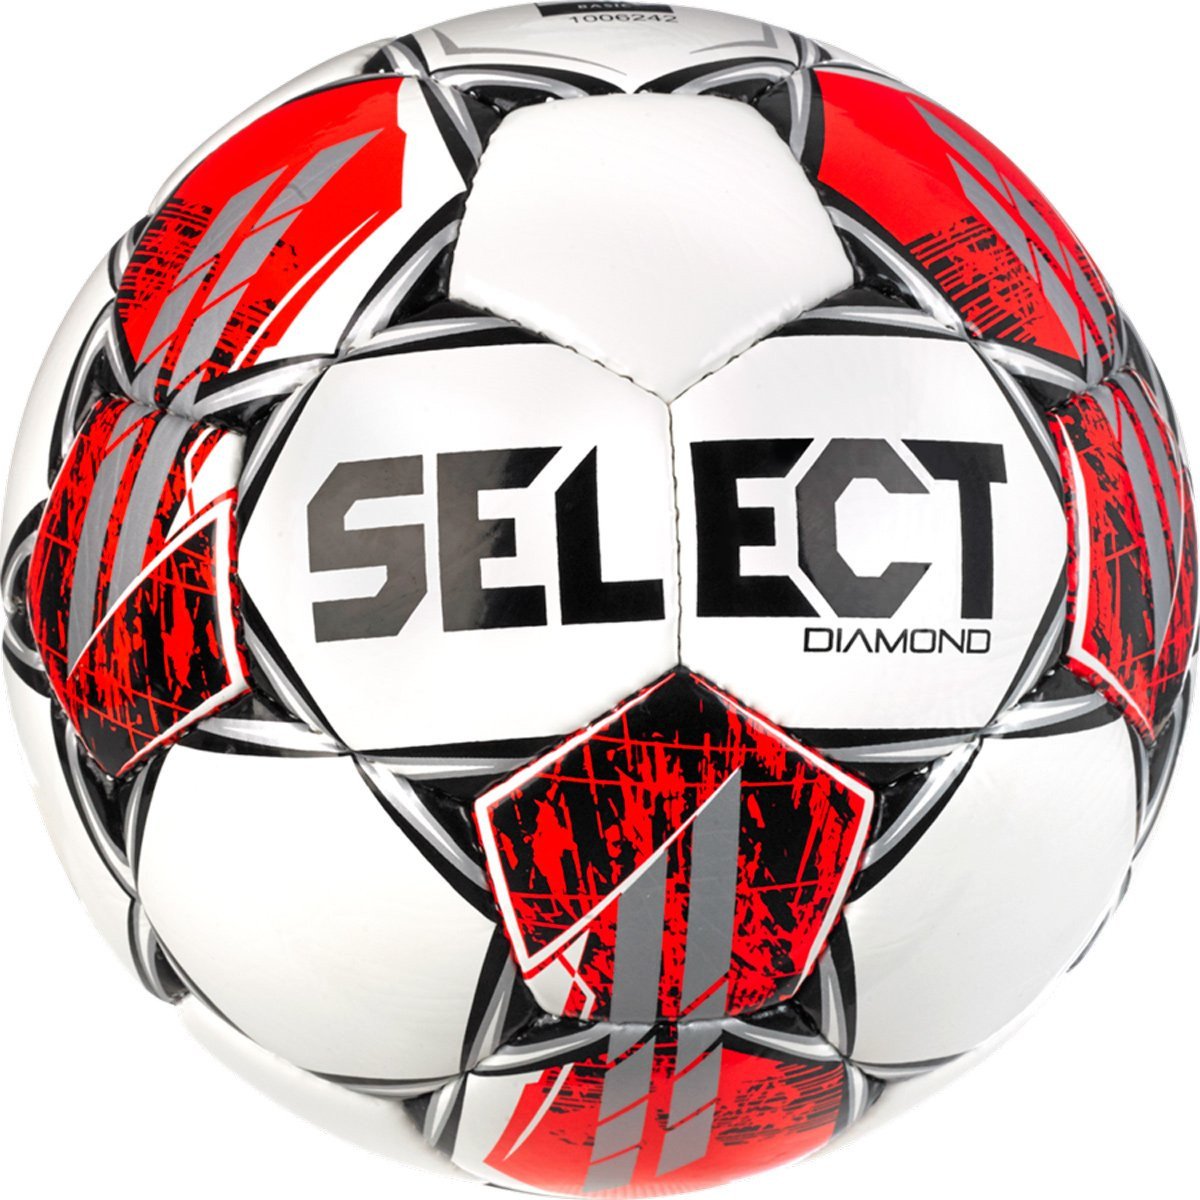 SELECT Diamond Version 23 Fodbold